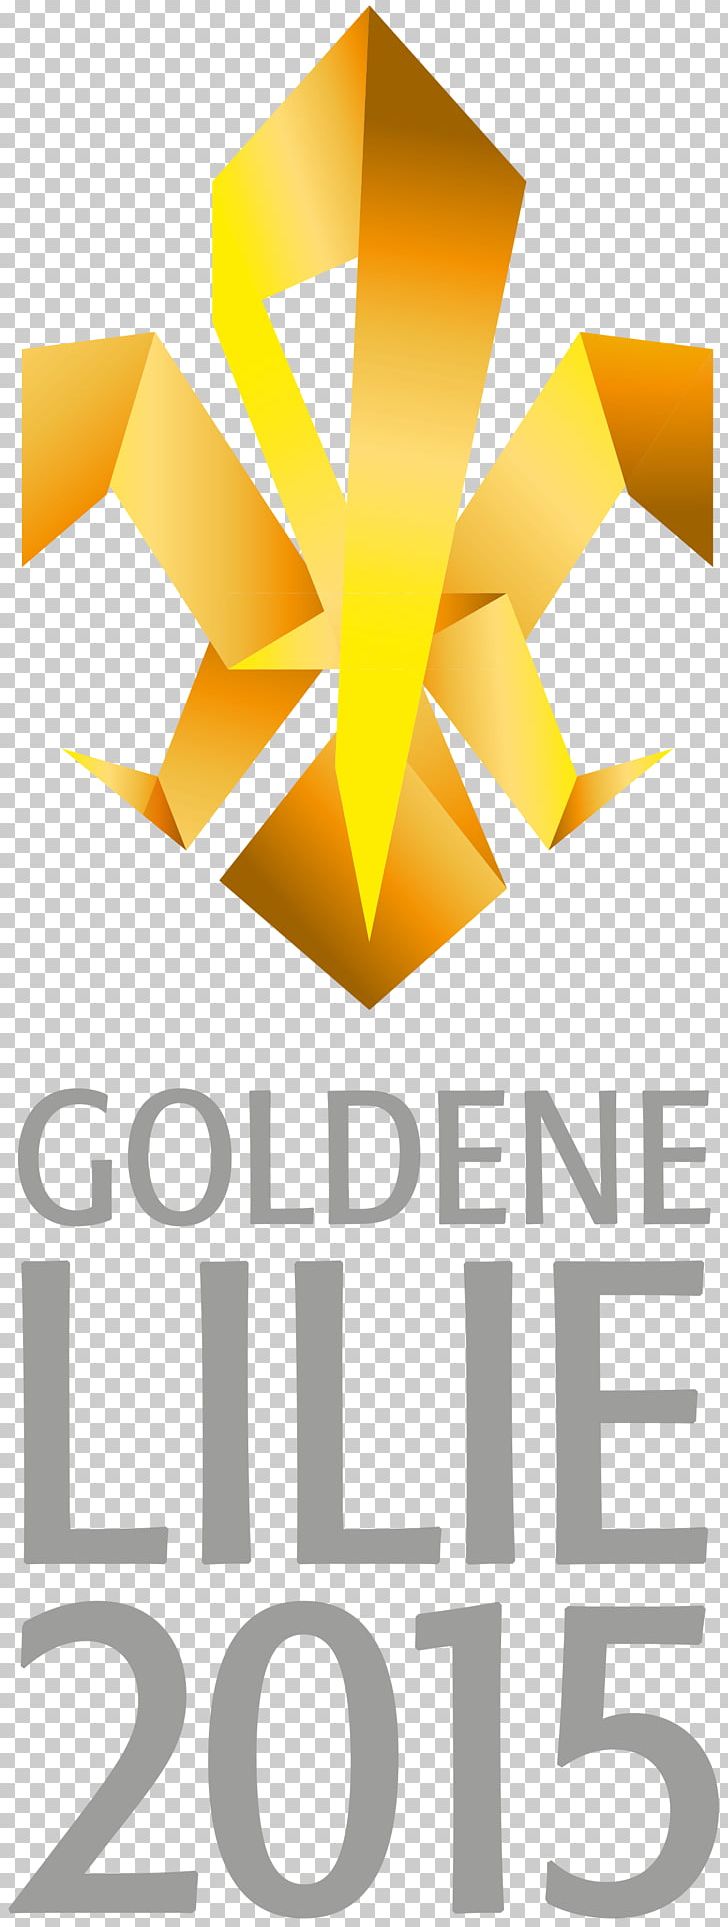 Goldene Lilie Universum Verlag GmbH Logo Corporate Social Responsibility Design PNG, Clipart, Award, Brand, Corporate Social Responsibility, Graphic Design, Industrial Design Free PNG Download